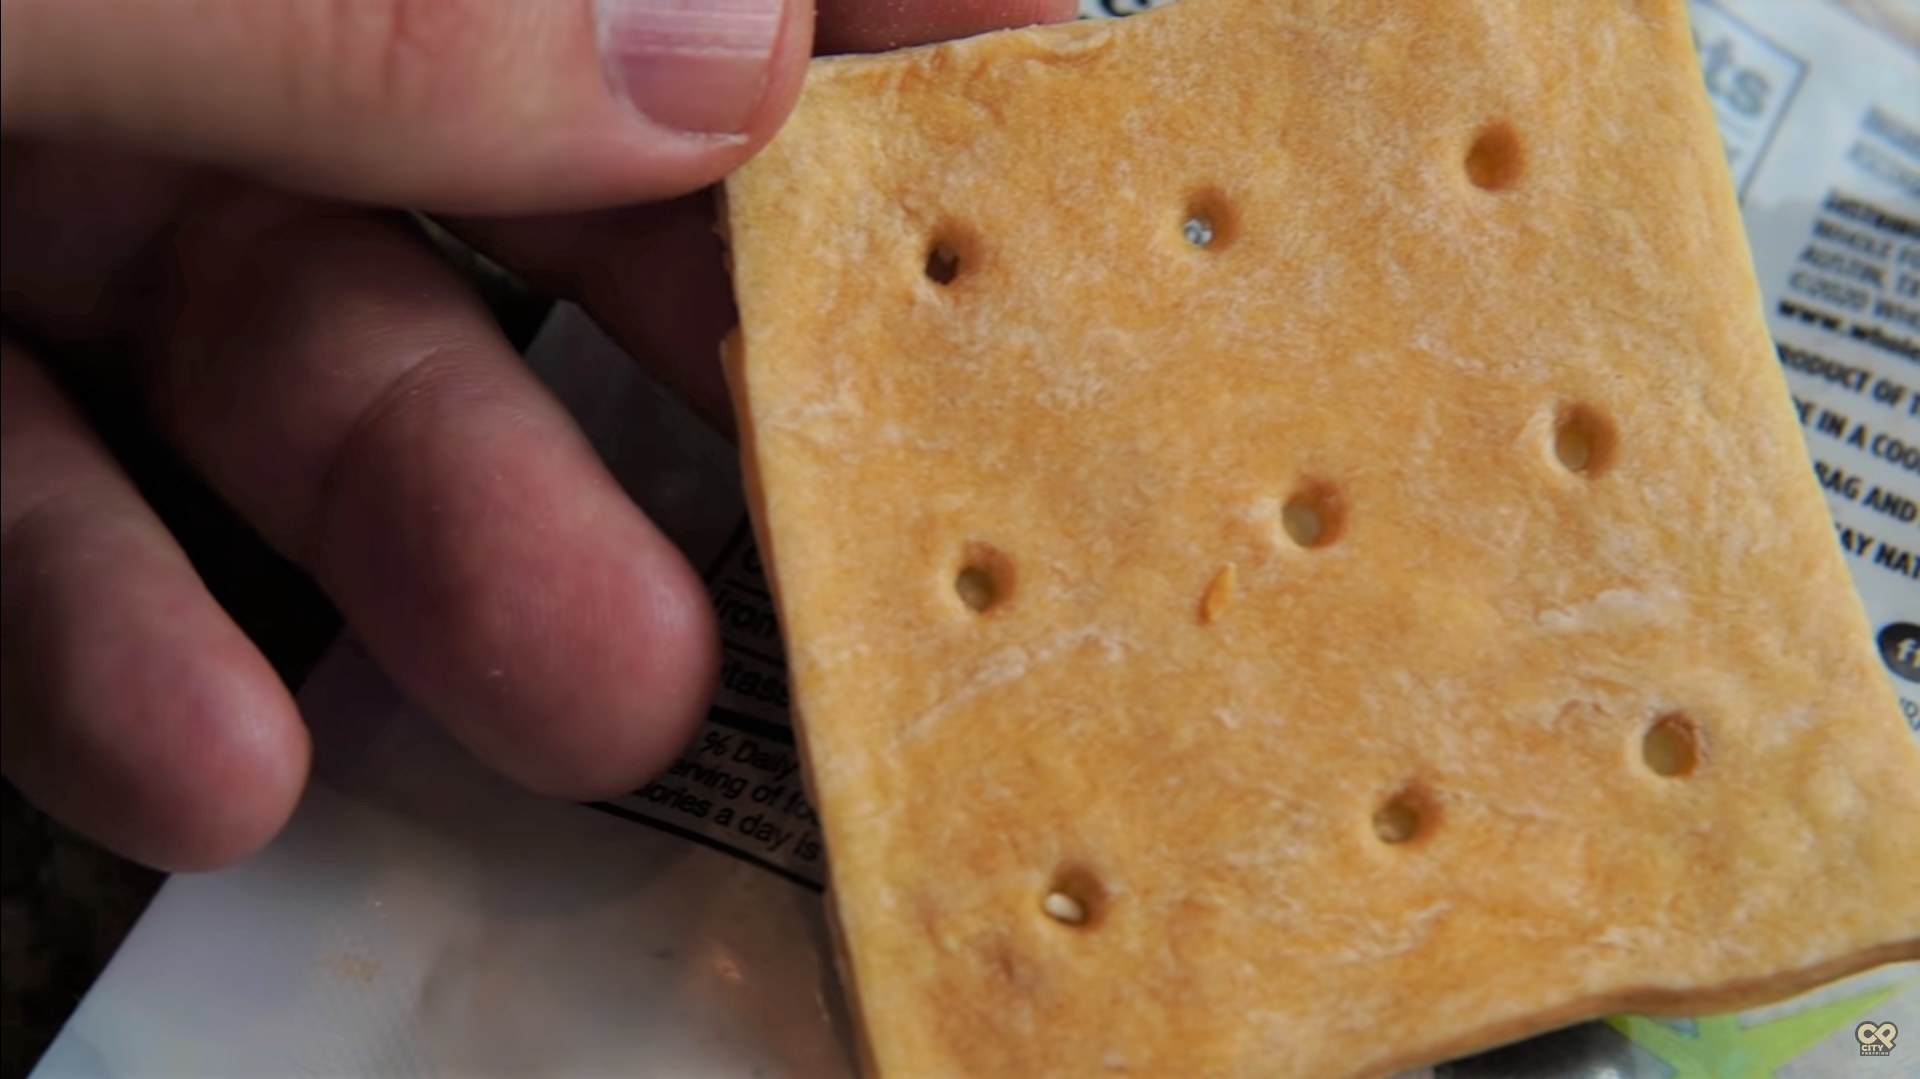 A piece of hardtack bread, resembling a cracker